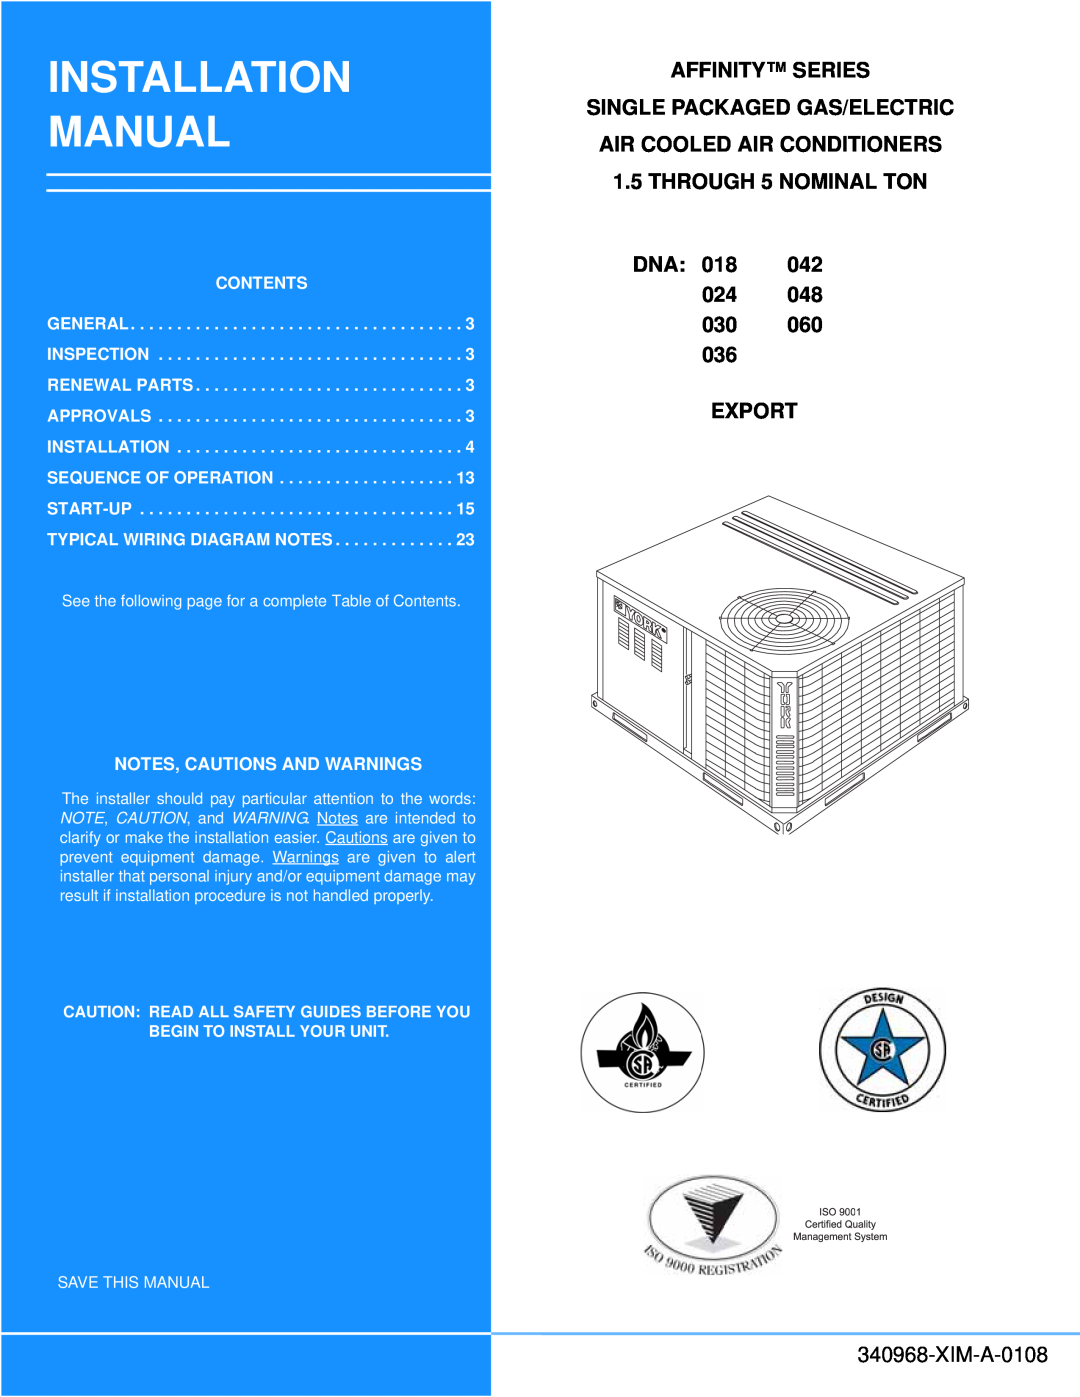 Johnson Controls 340968-XIM-A-0108 installation manual Affinity Series, Dna, Export, Installation Manual, Contents 